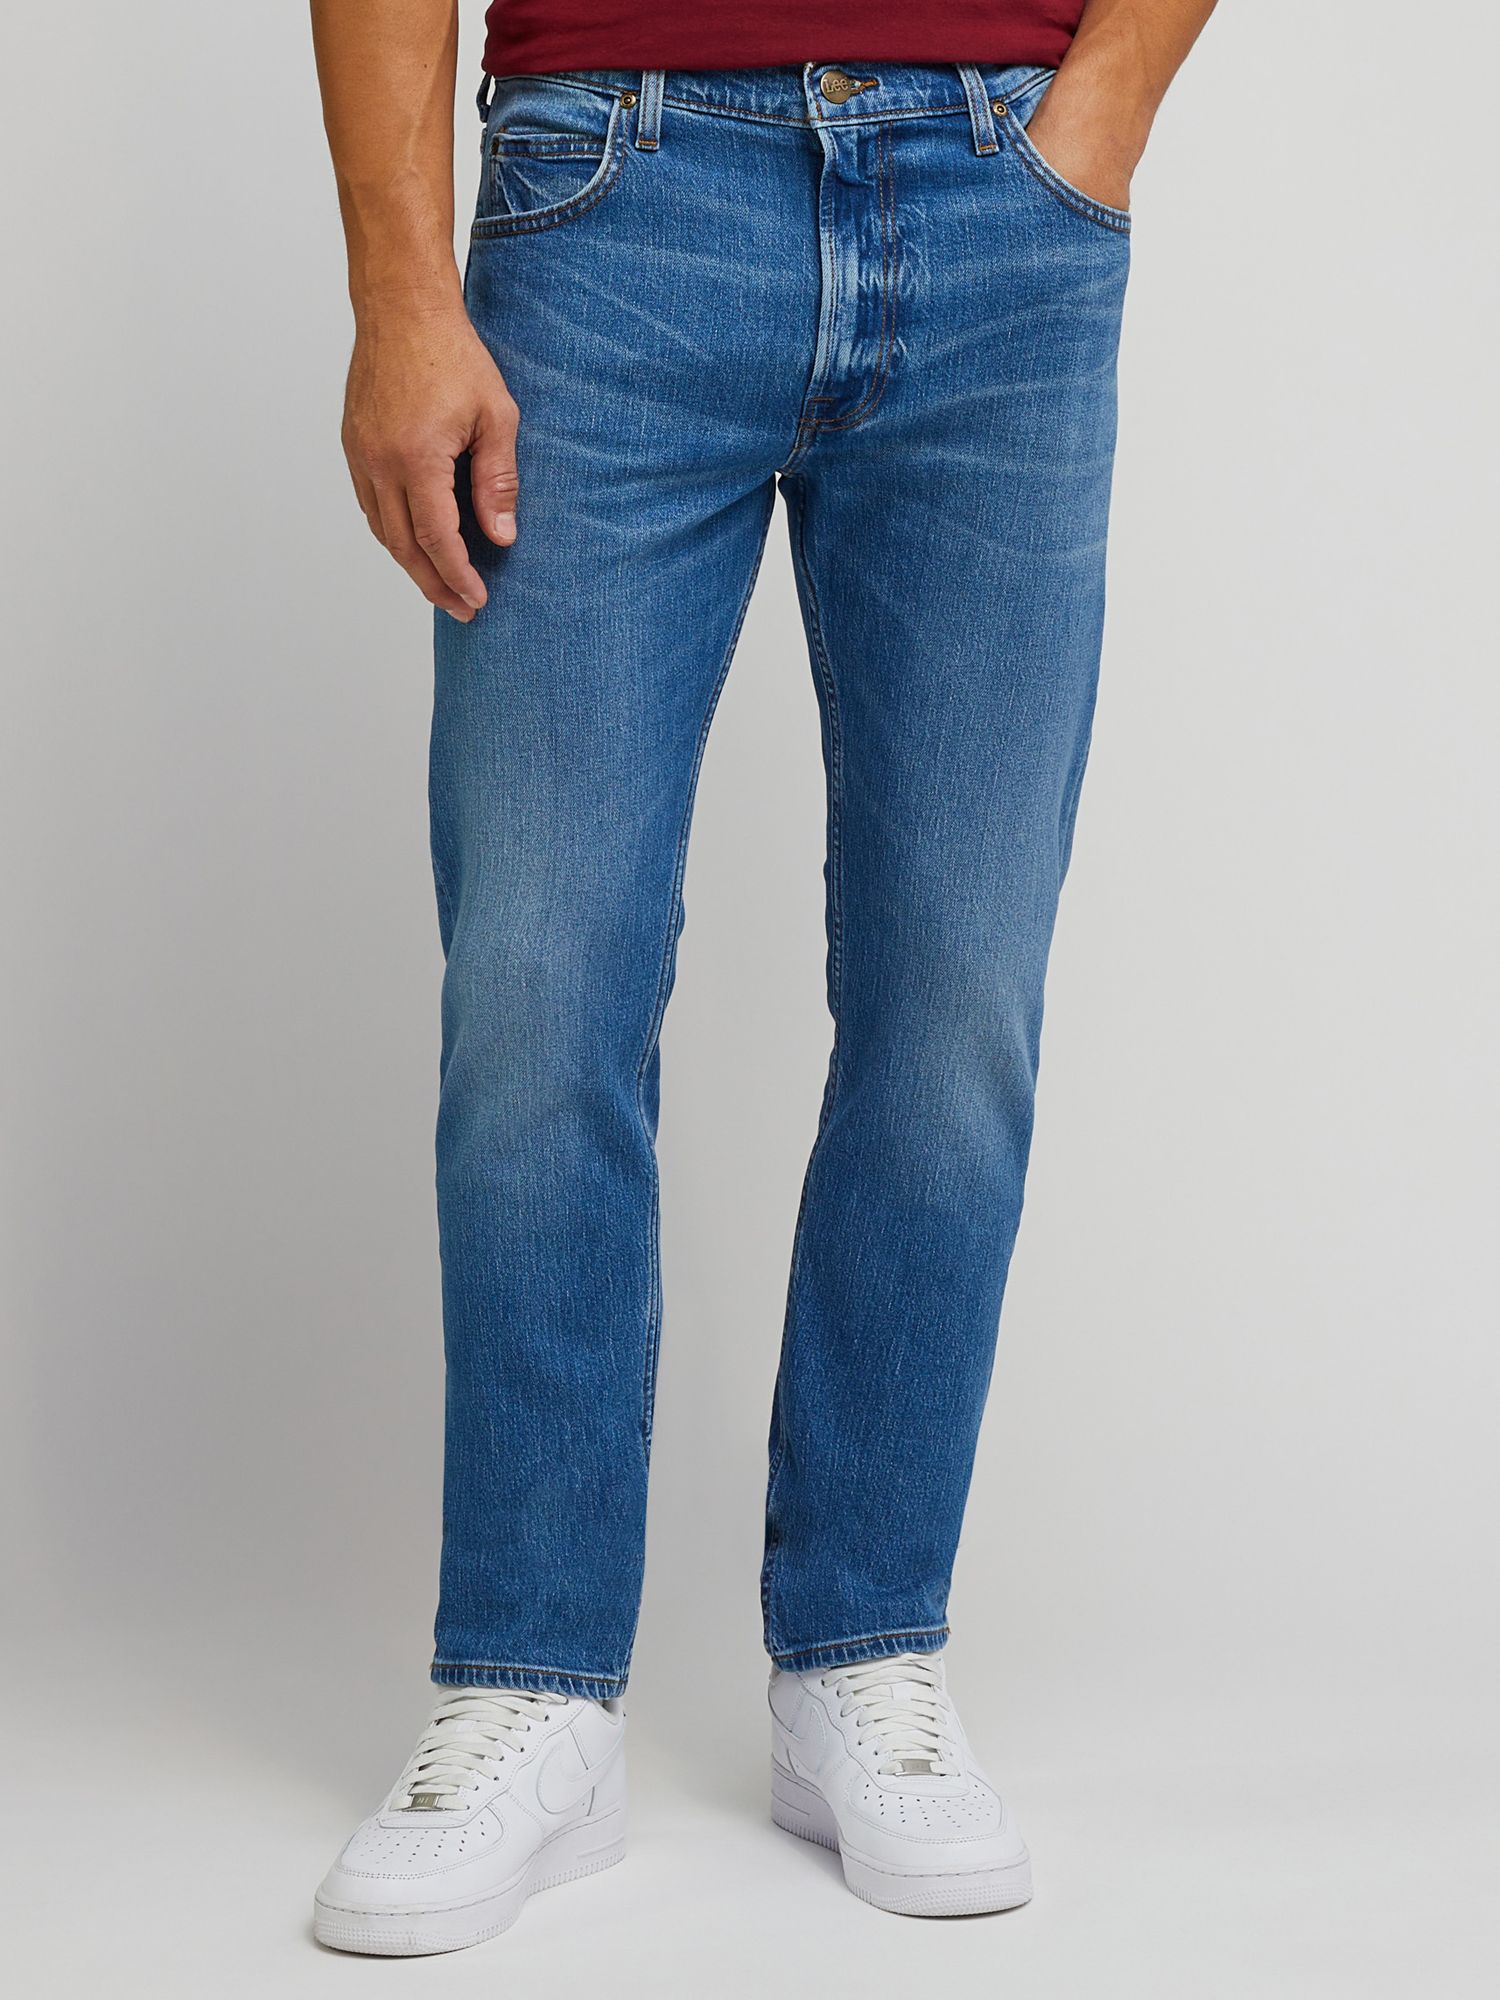 Lee Rider Slim Fit Denim Jeans, Indigo Vintage at John Lewis & Partners